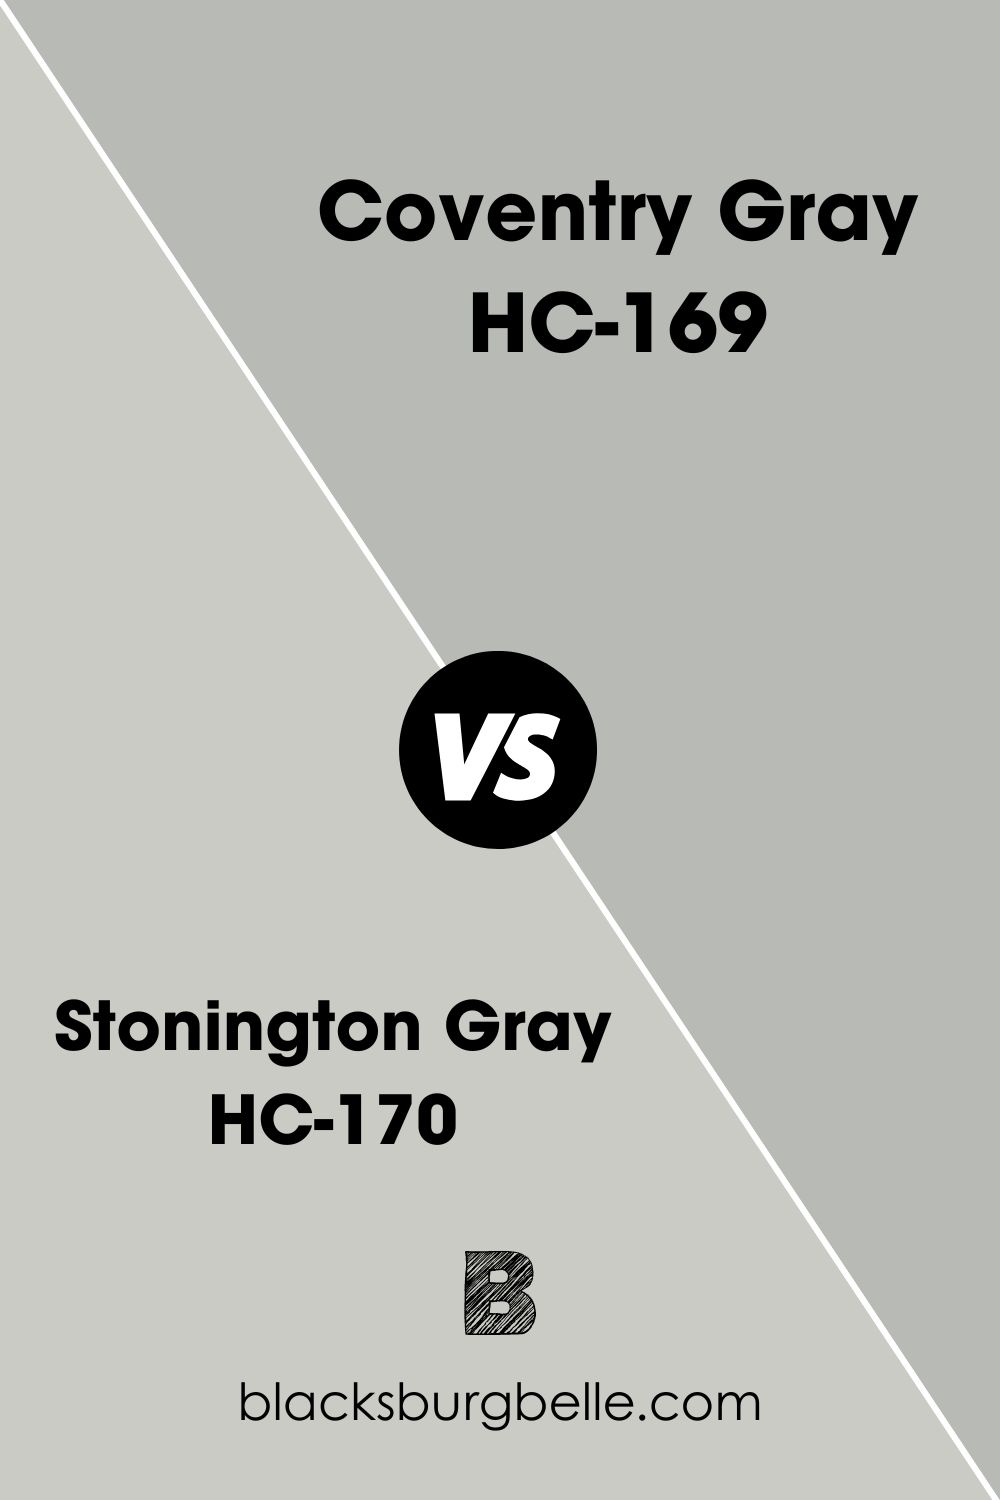 Stonington Gray HC-170